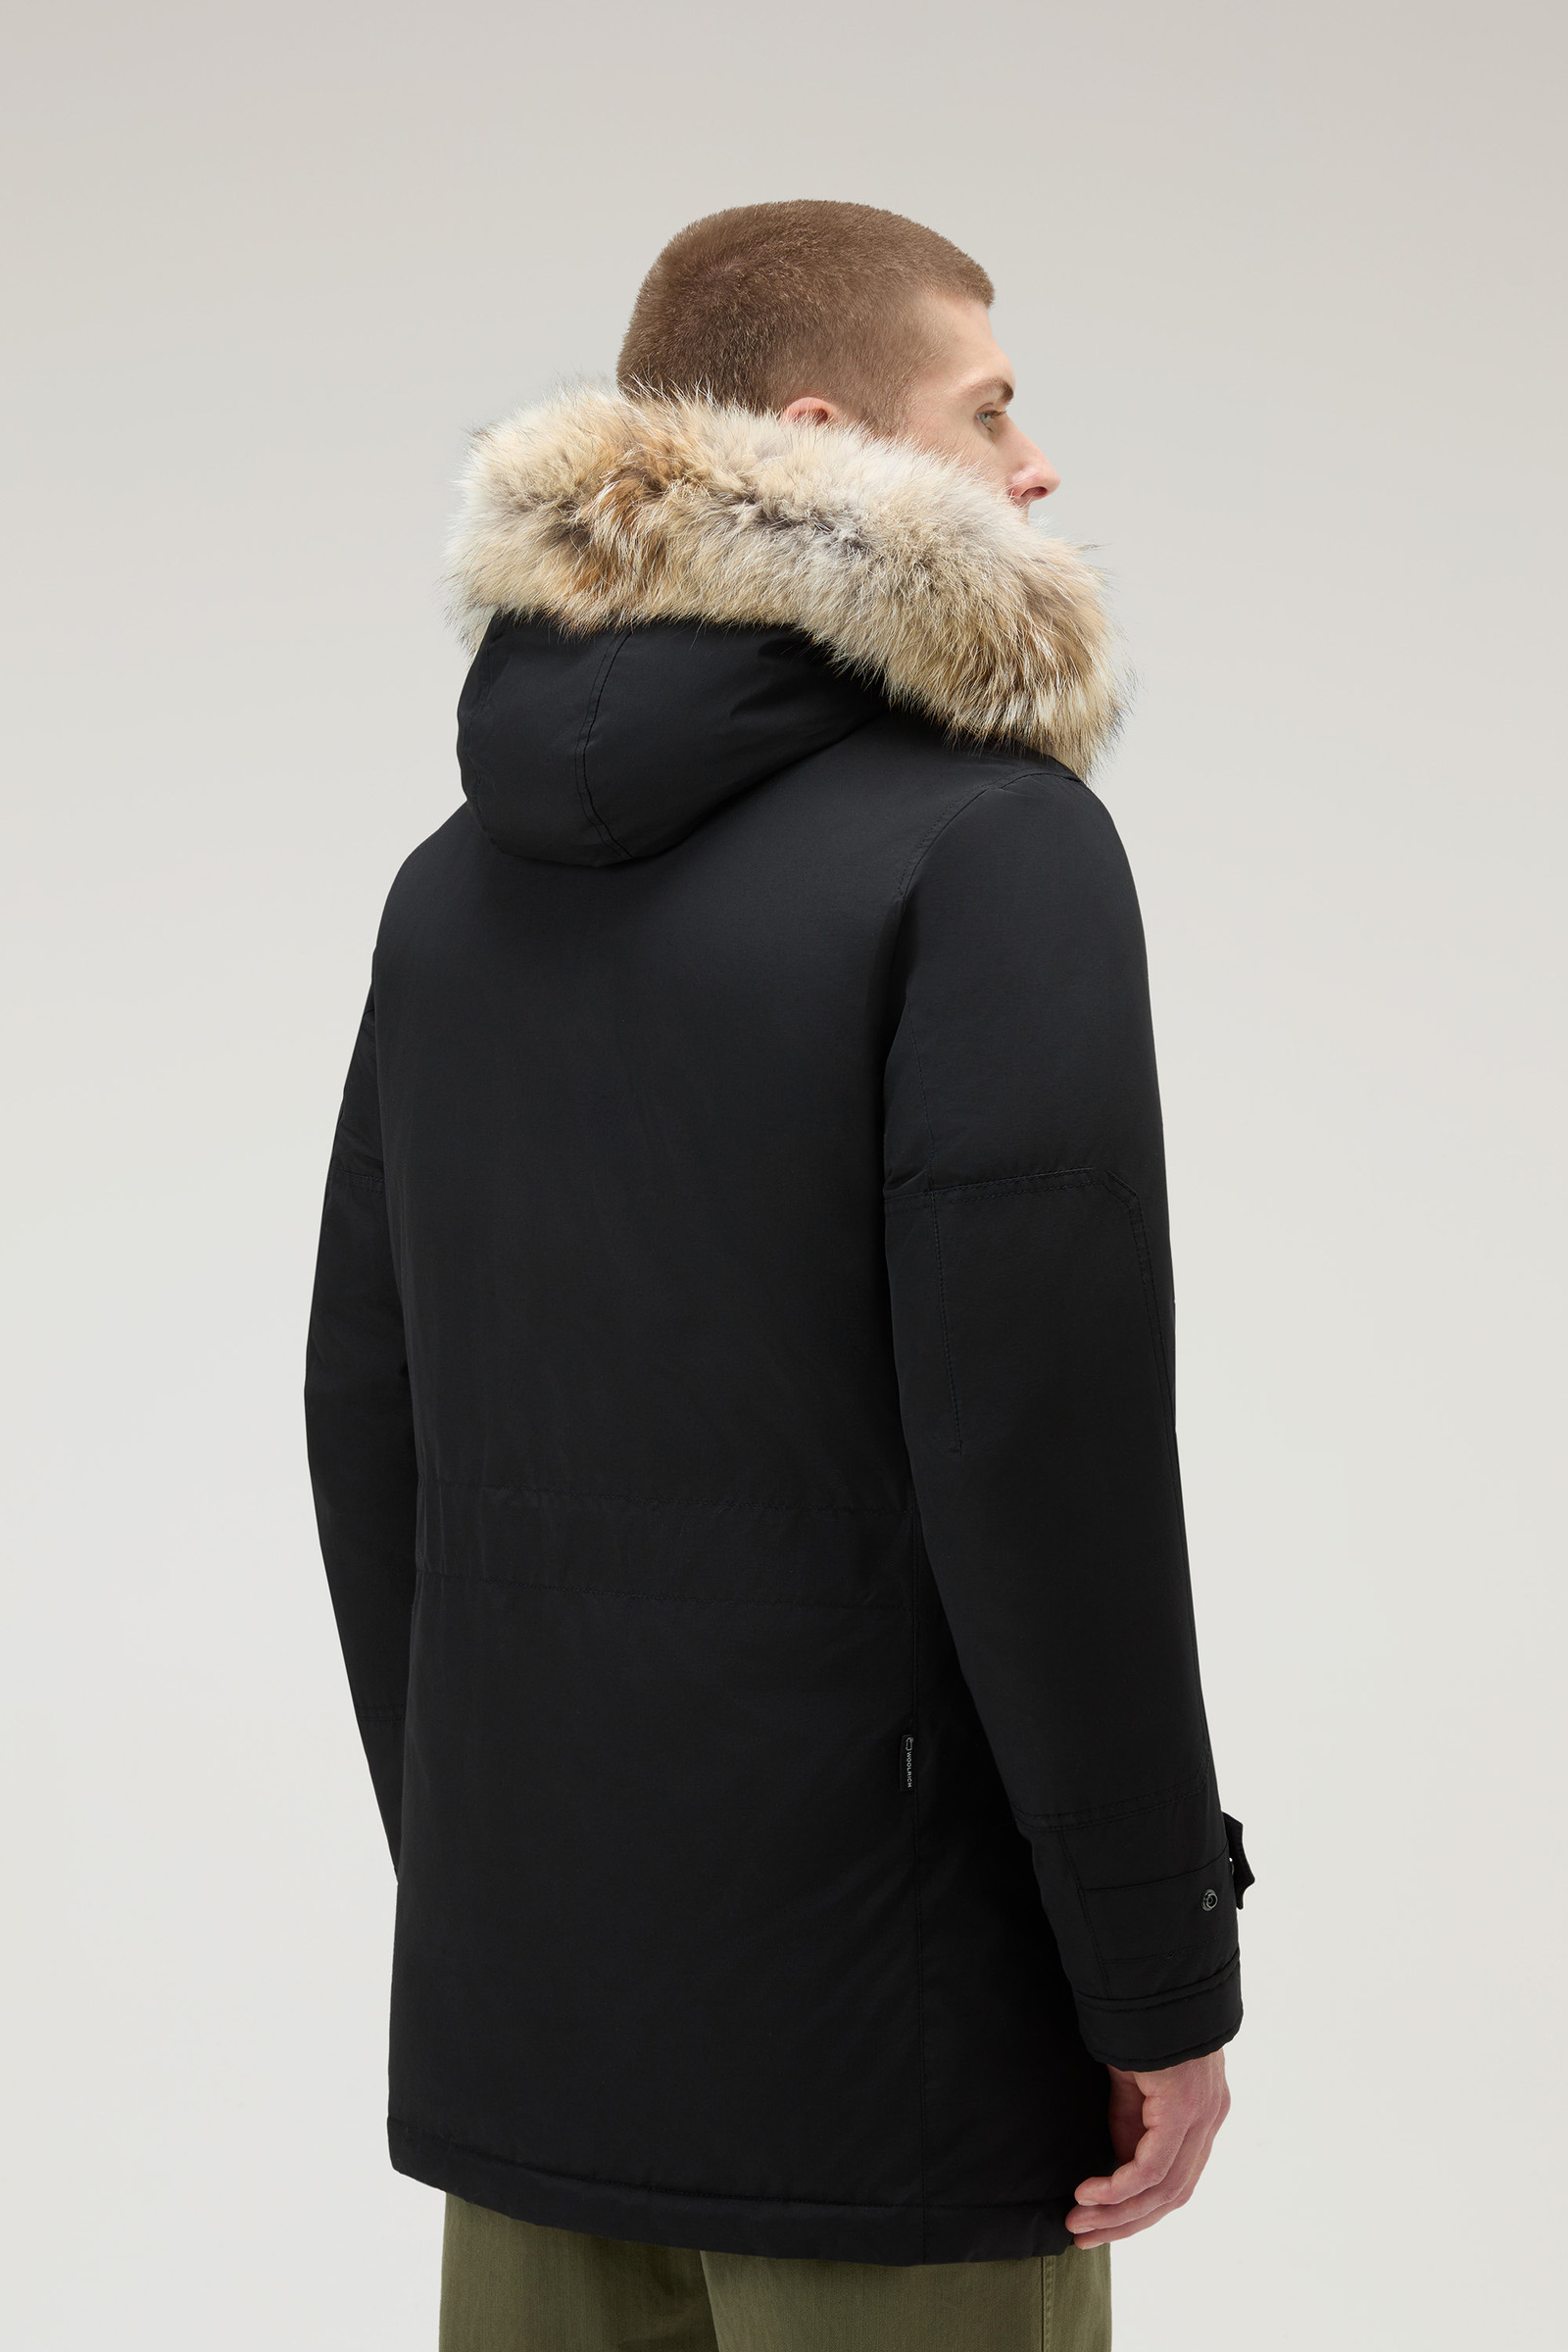 Woolrich Fur Trim Replacement Collar : Premium coyote fur trim